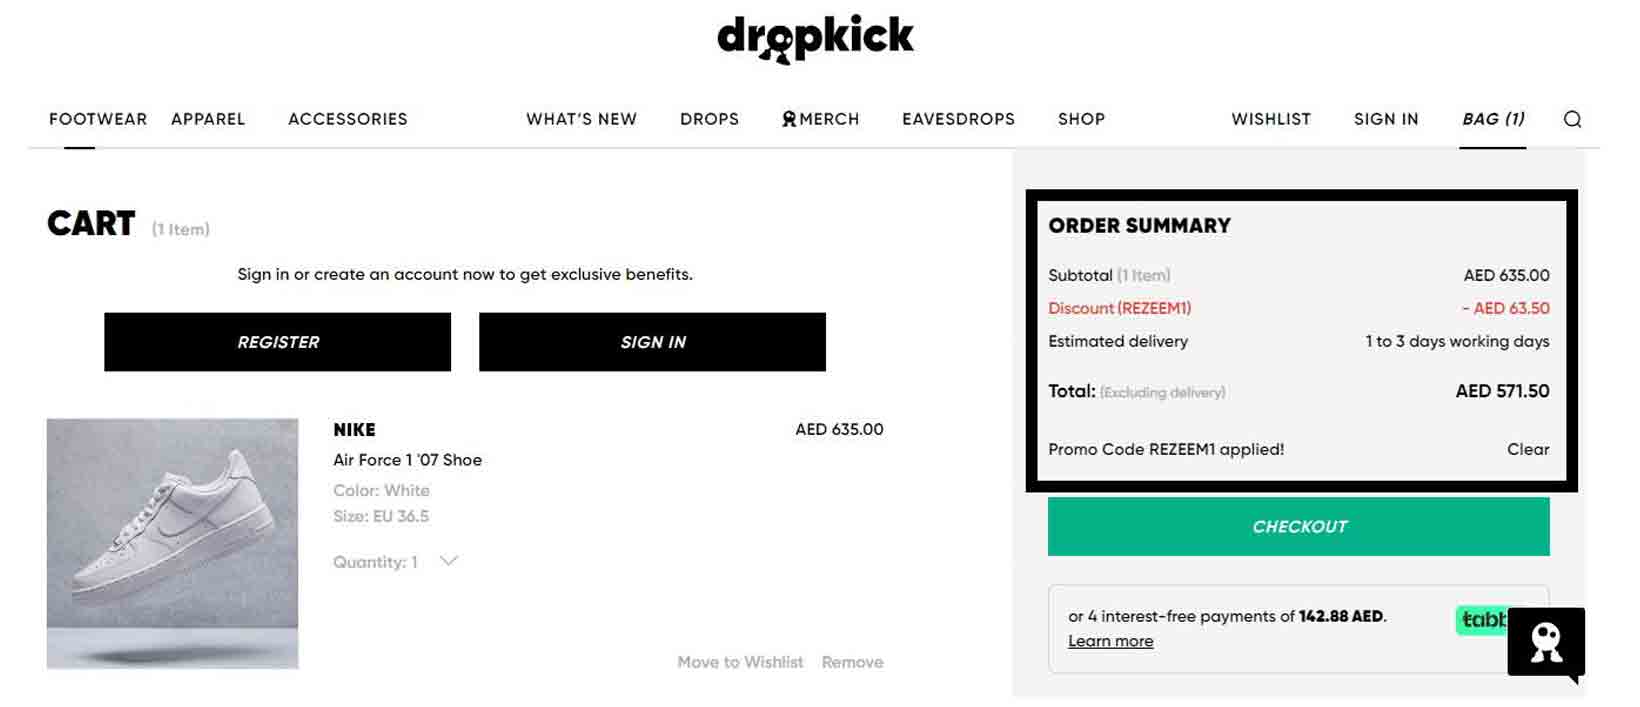 Dropkick check out page